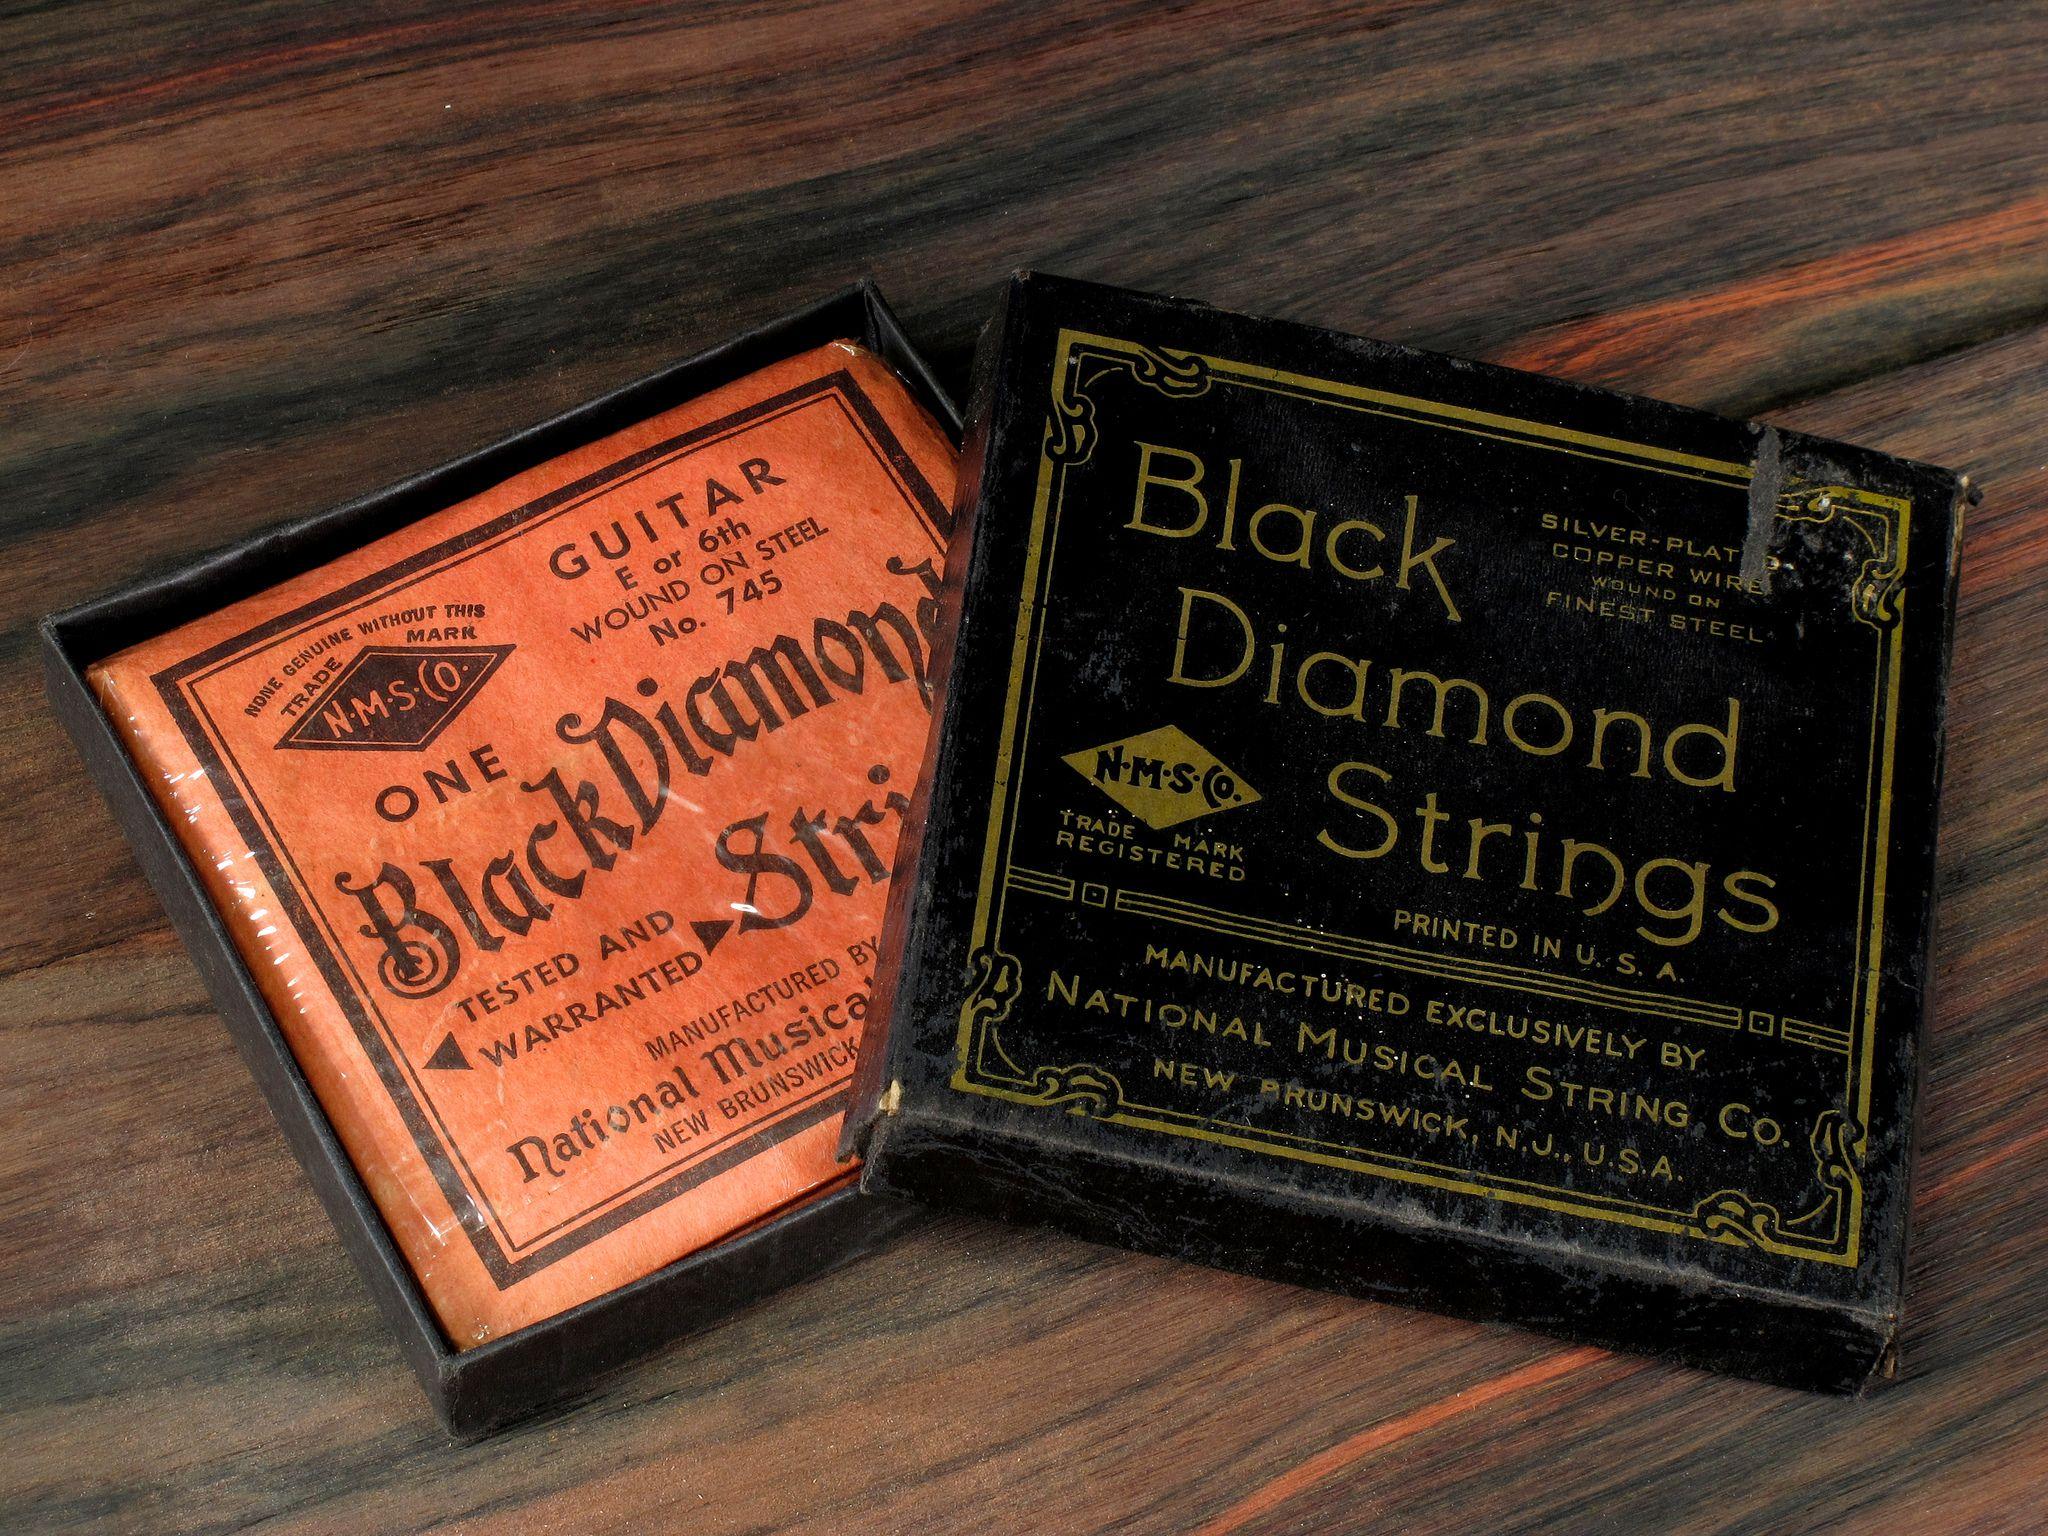 Black Diamond Strings Logo - Anyone else remember Black Diamond strings? Acoustic